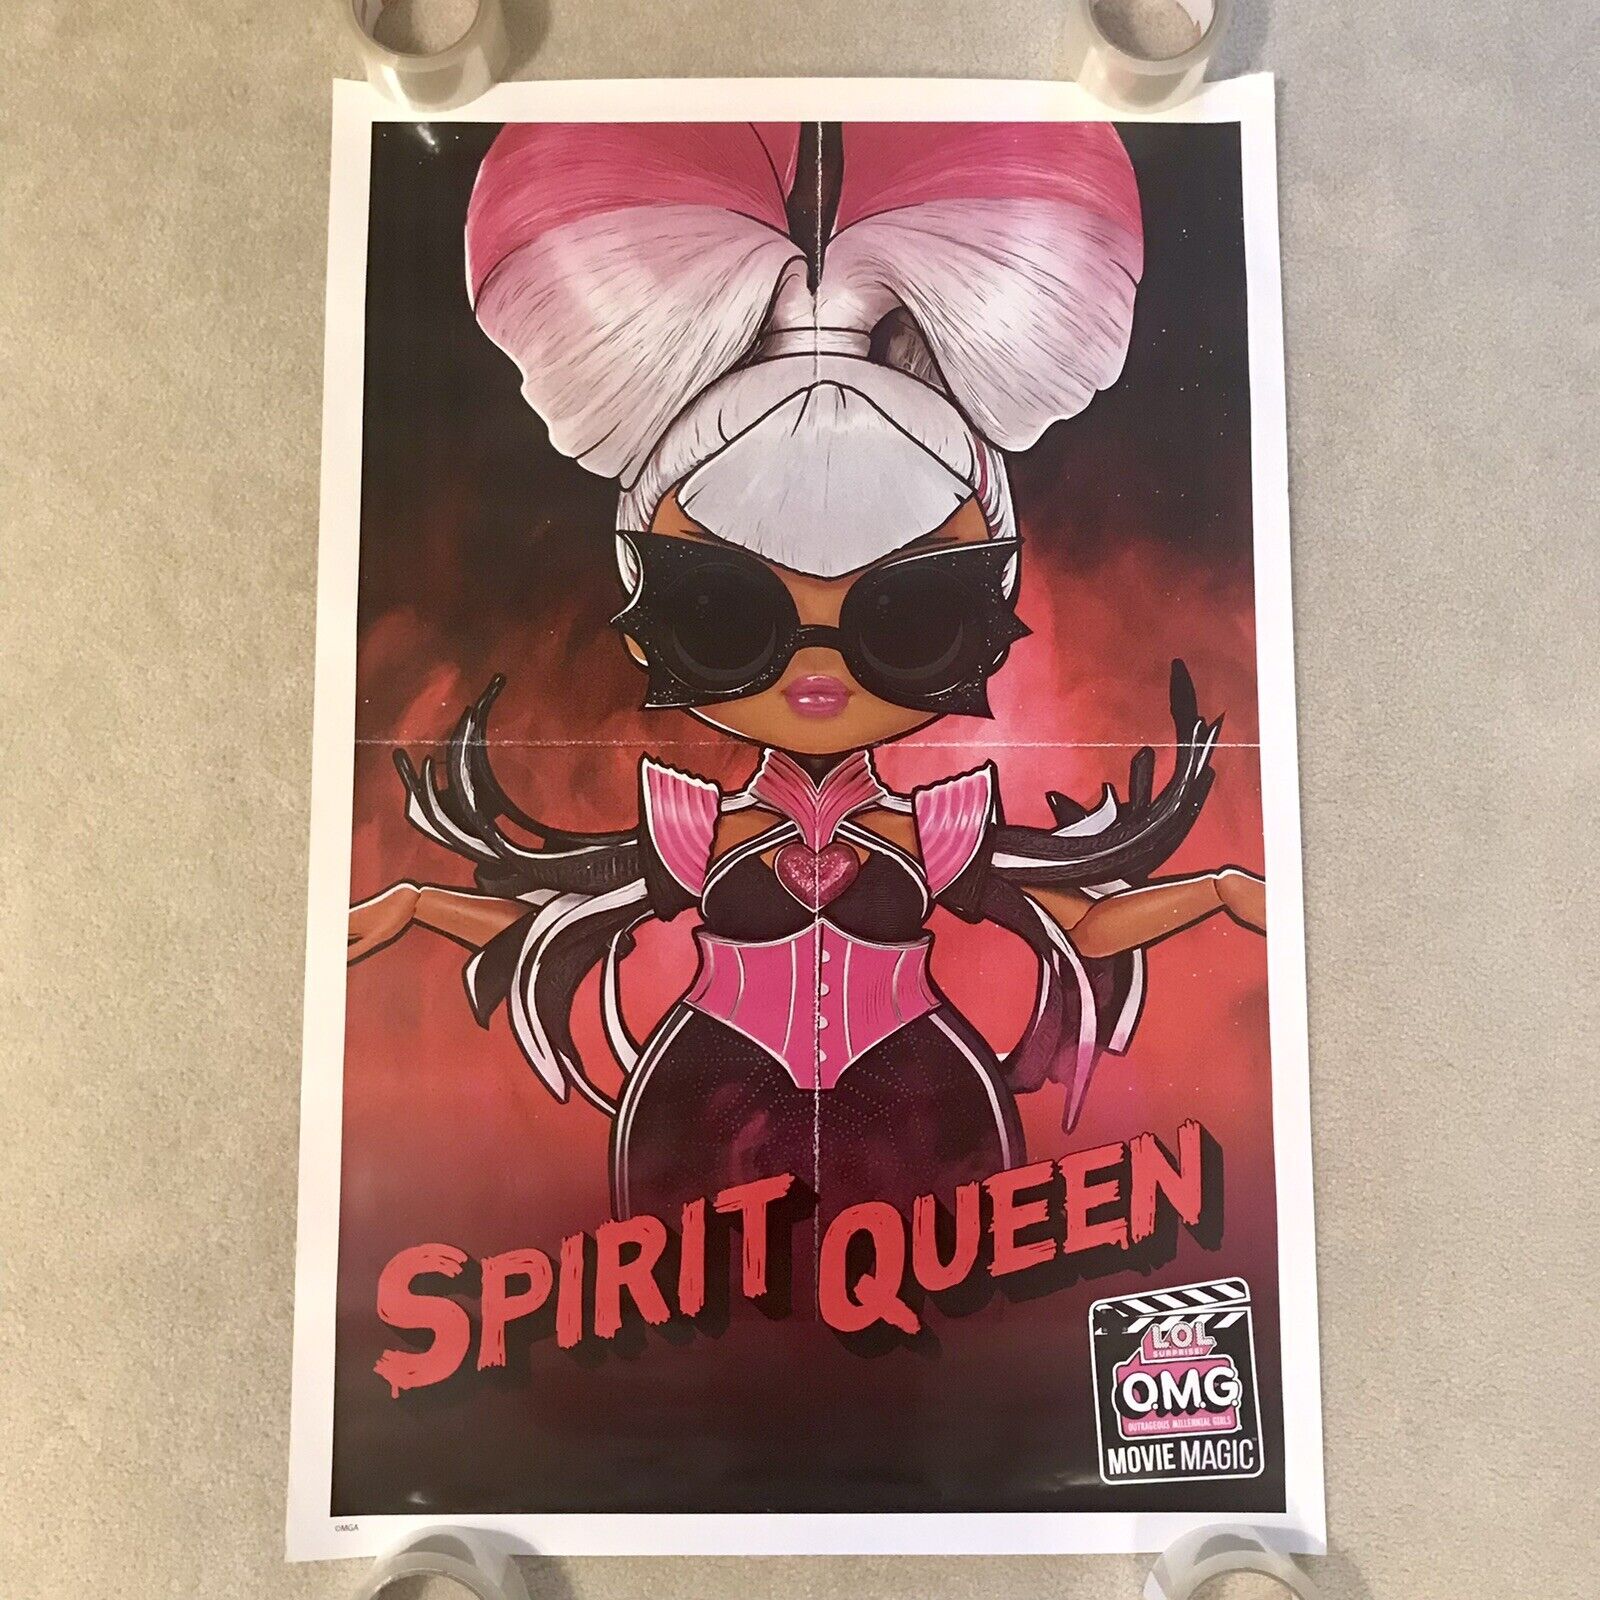 LOL OMG Movie Magic Poster 36” X 24” Spirit Queen PROMO STORE DISPLAY MGA RARE